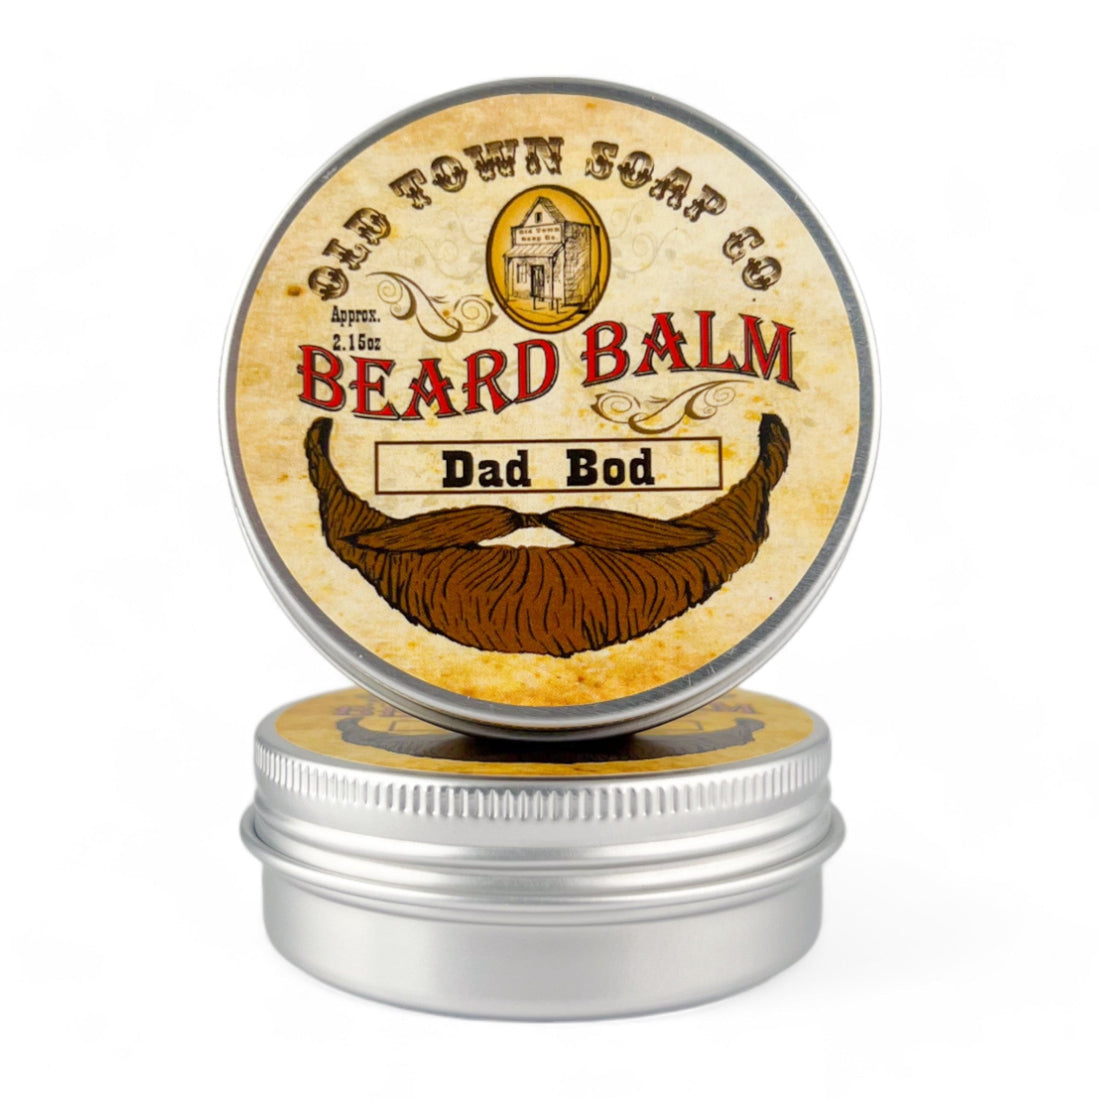 Dad Bod Beard Balm - Old Town Soap Co.